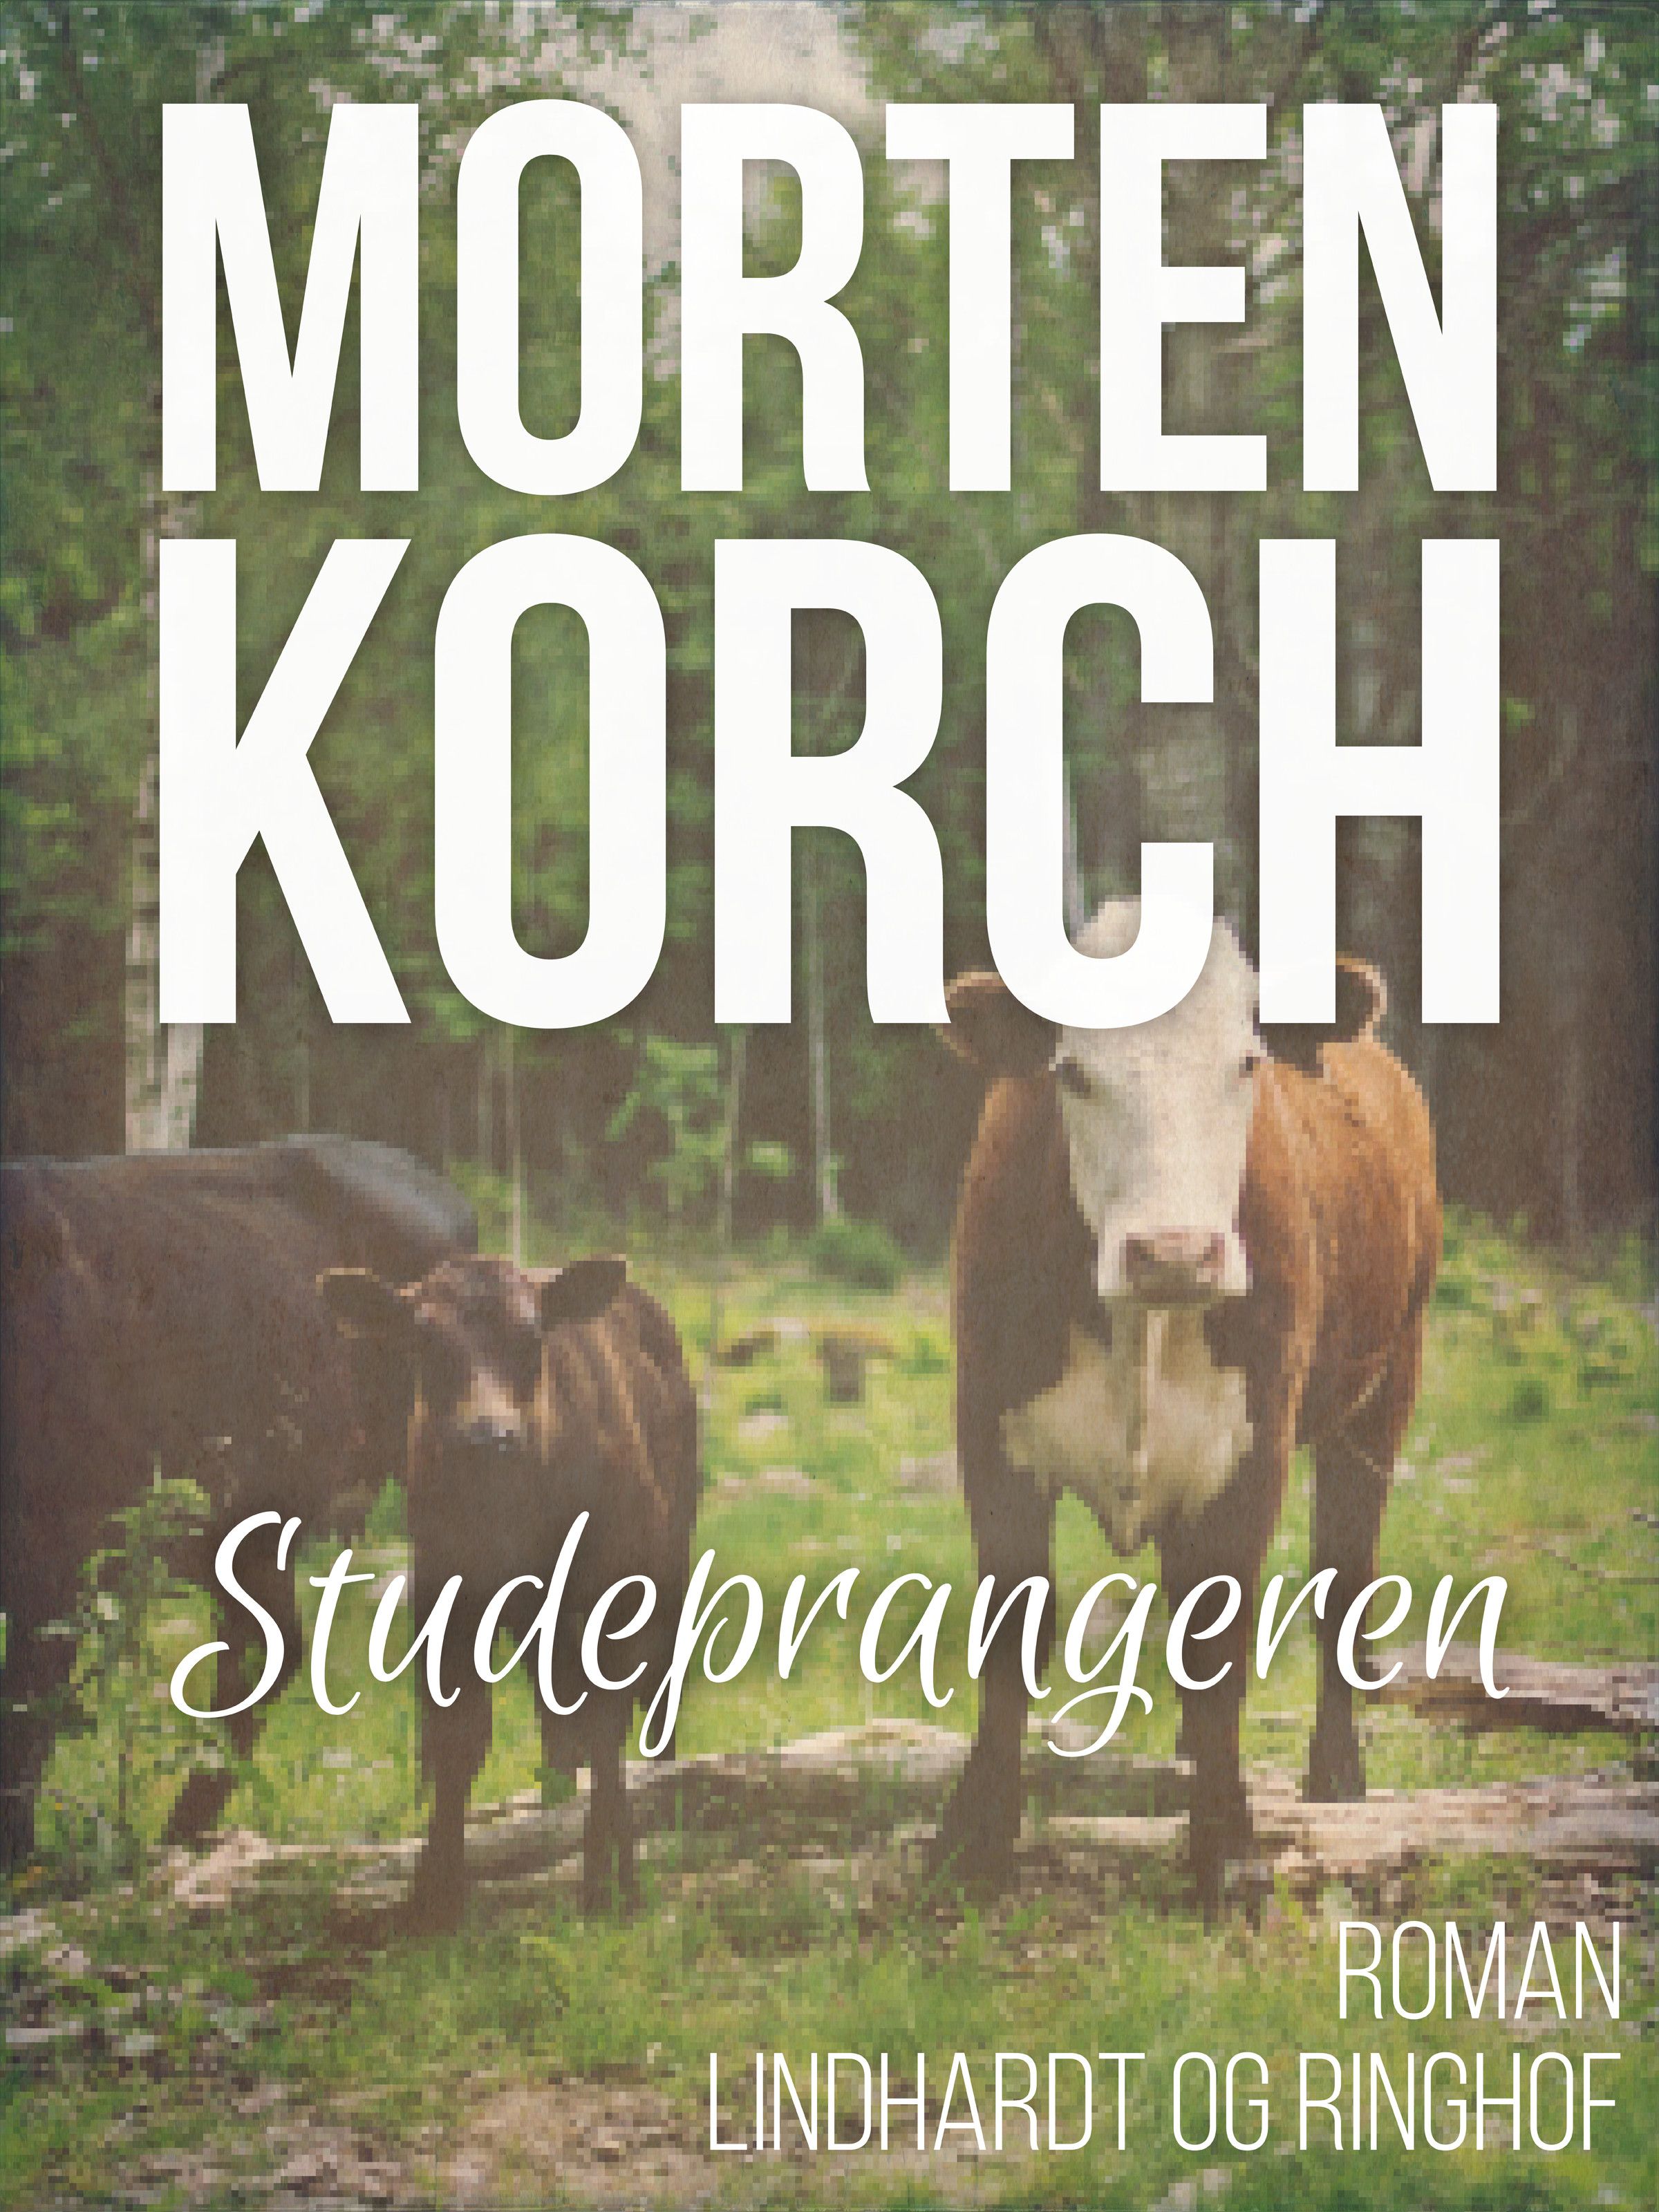 Studeprangeren, ljudbok av Morten Korch